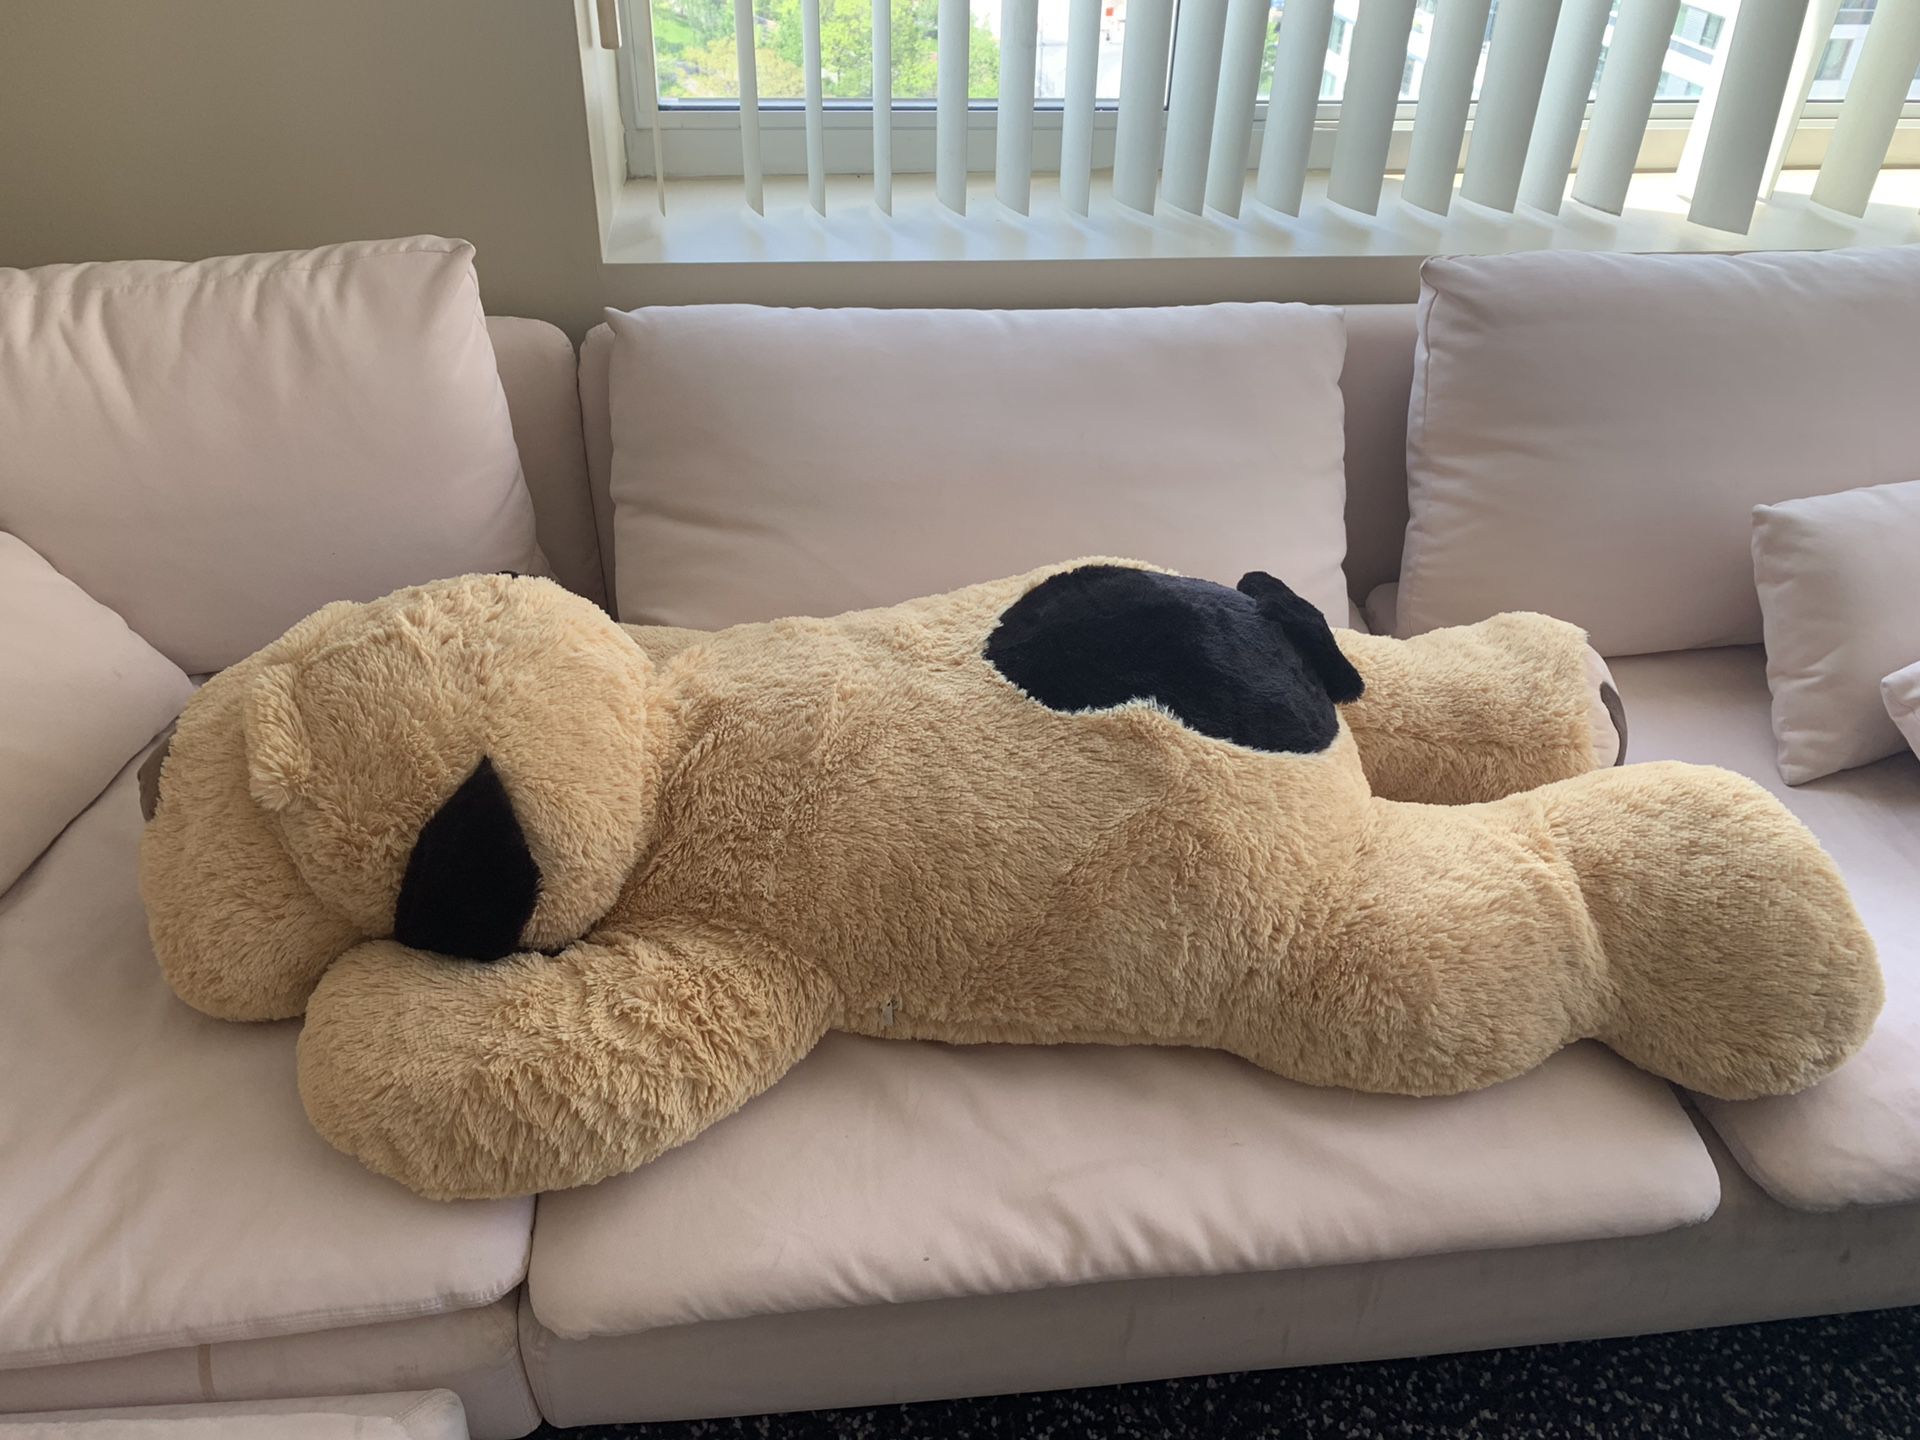 Big Stuffed Animal - Dog